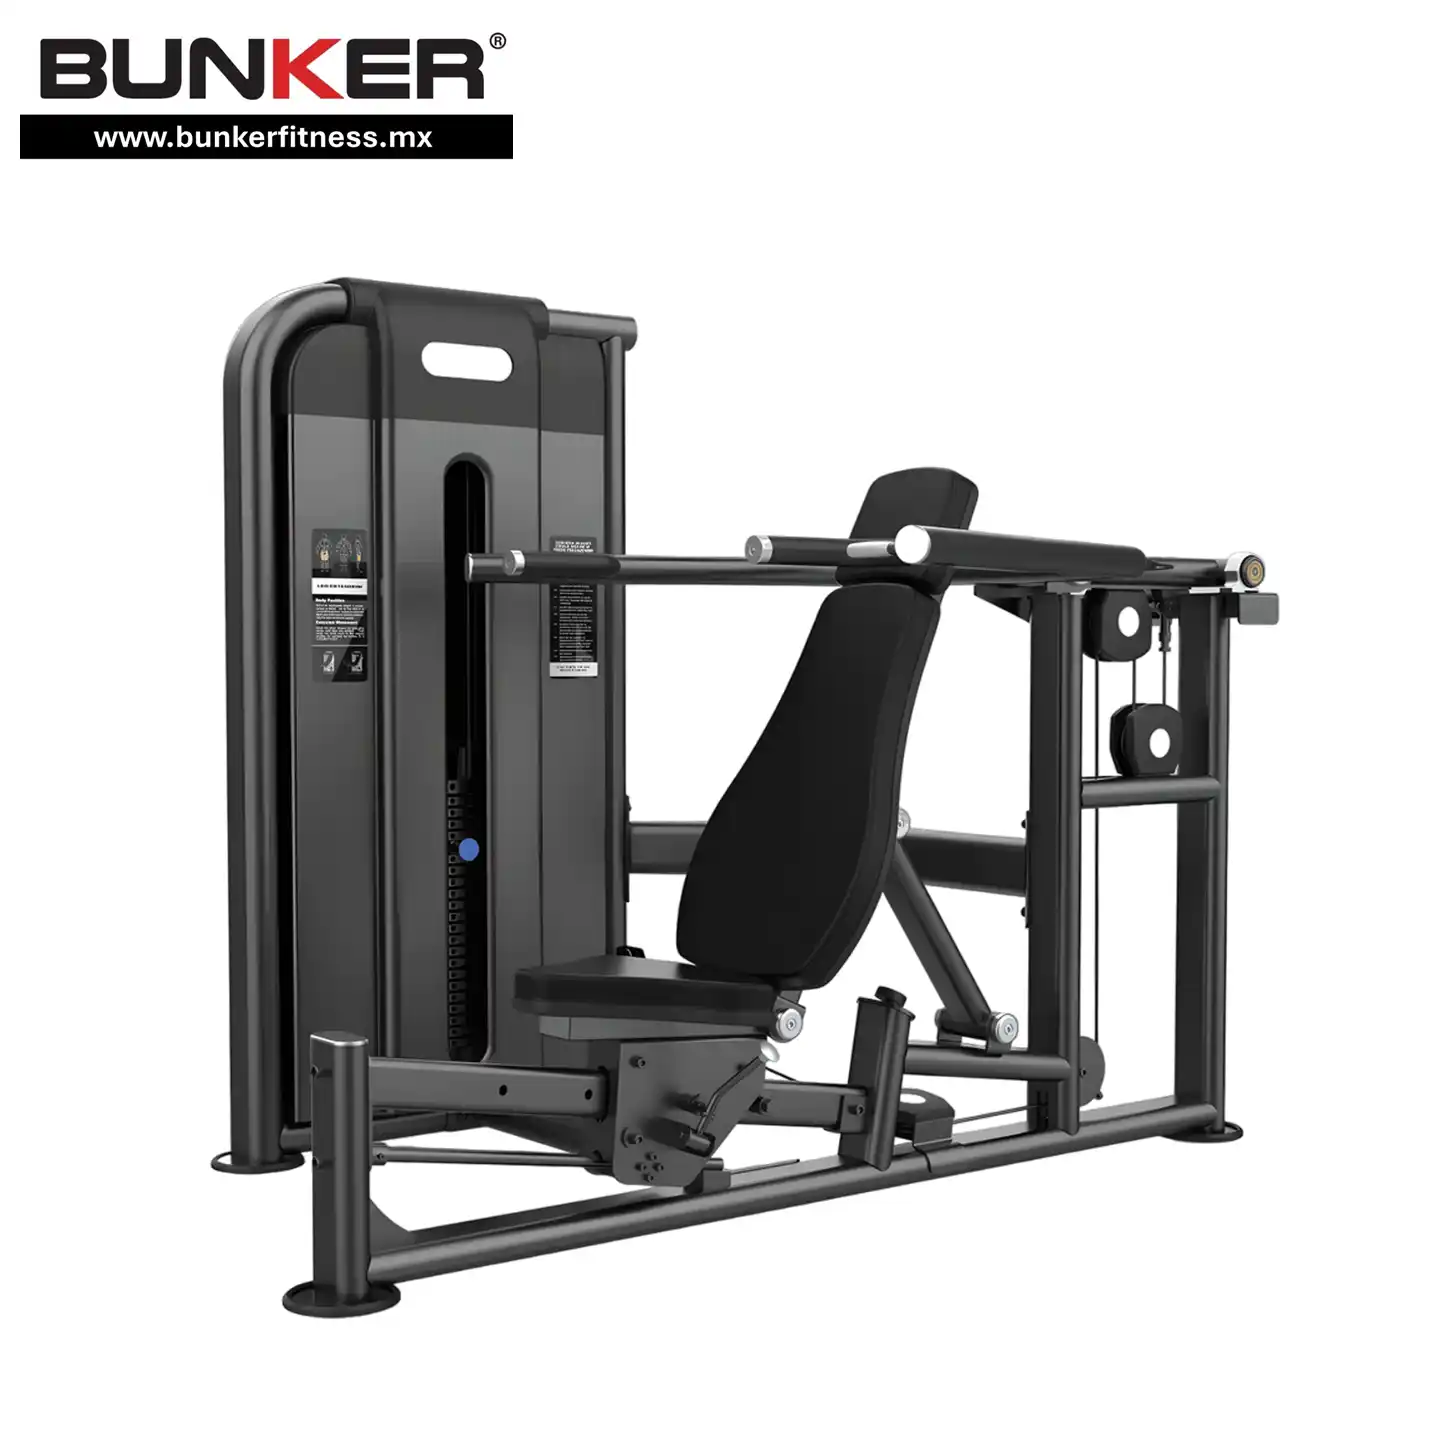 aparato de chest press con peso integrado bunker gym bunker fitness